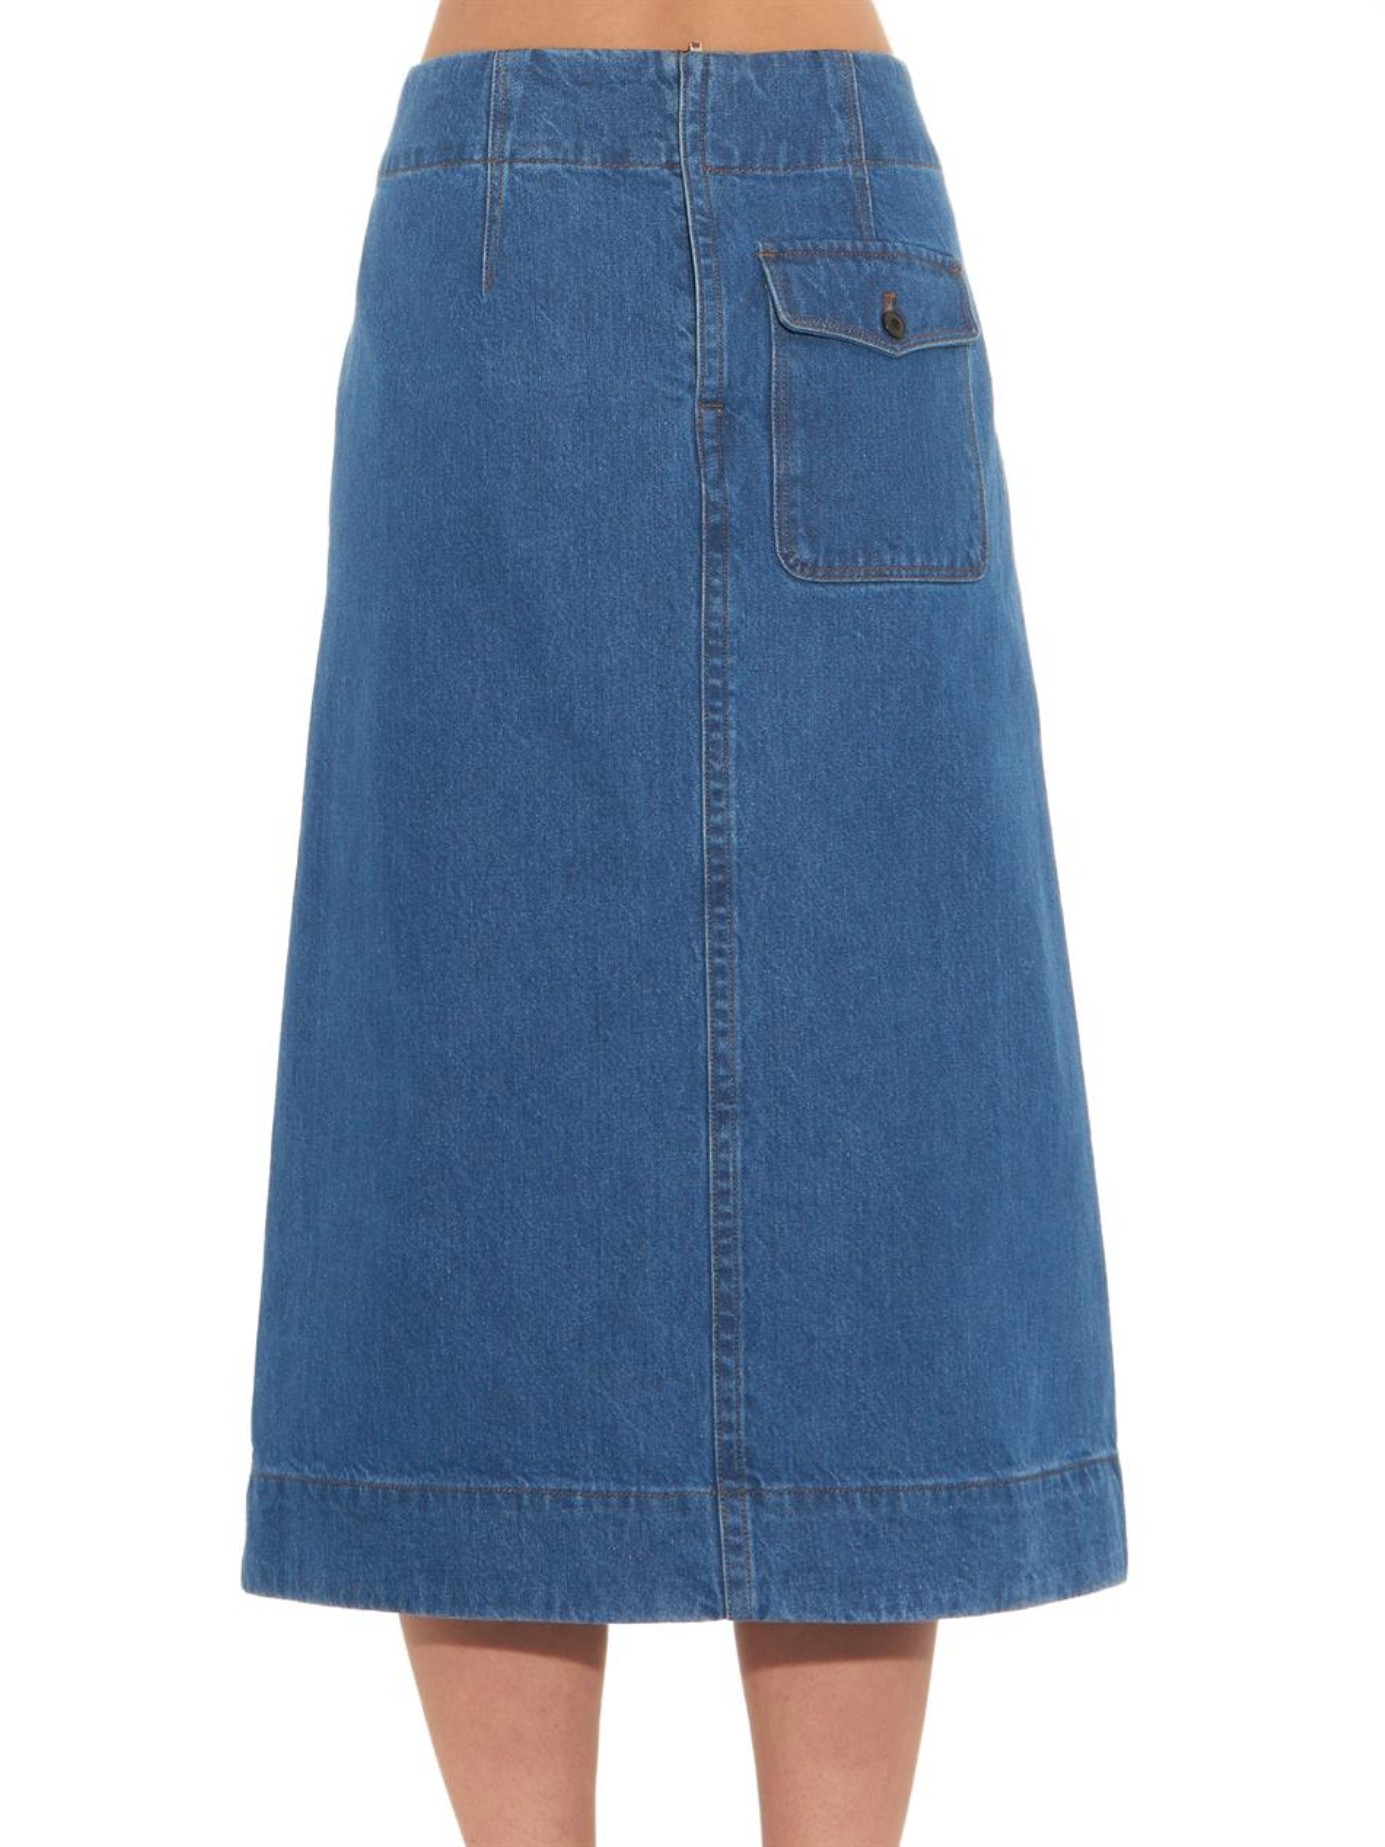 Lyst - Lemaire Stonewash Denim A-line Skirt in Blue